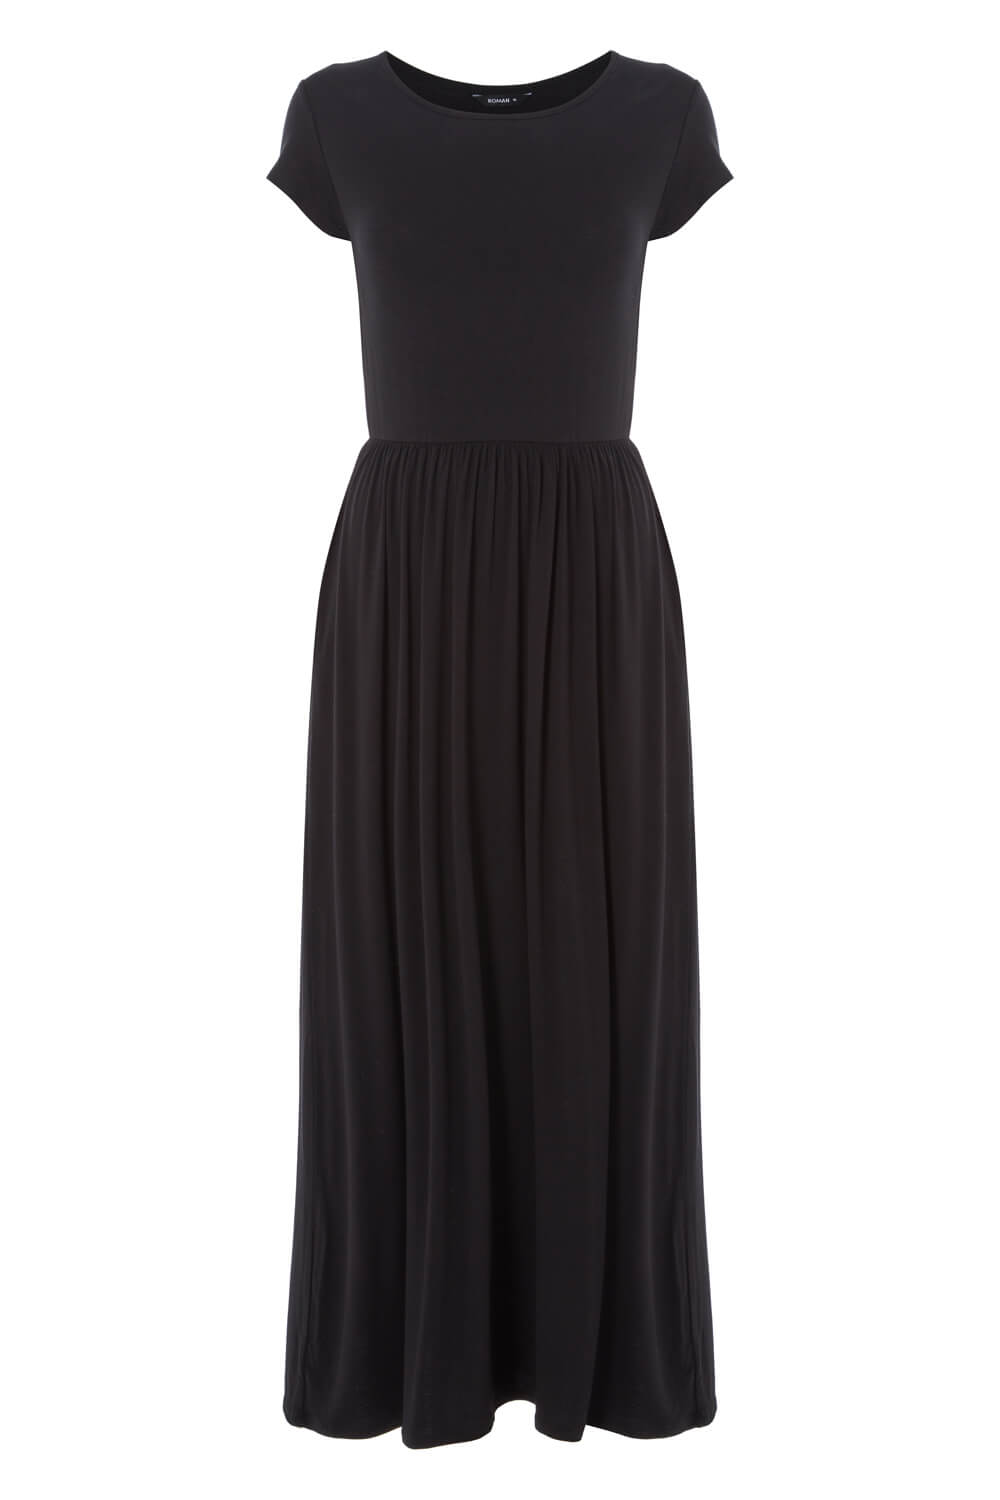 Black Gathered Skirt Maxi Dress, Image 4 of 4